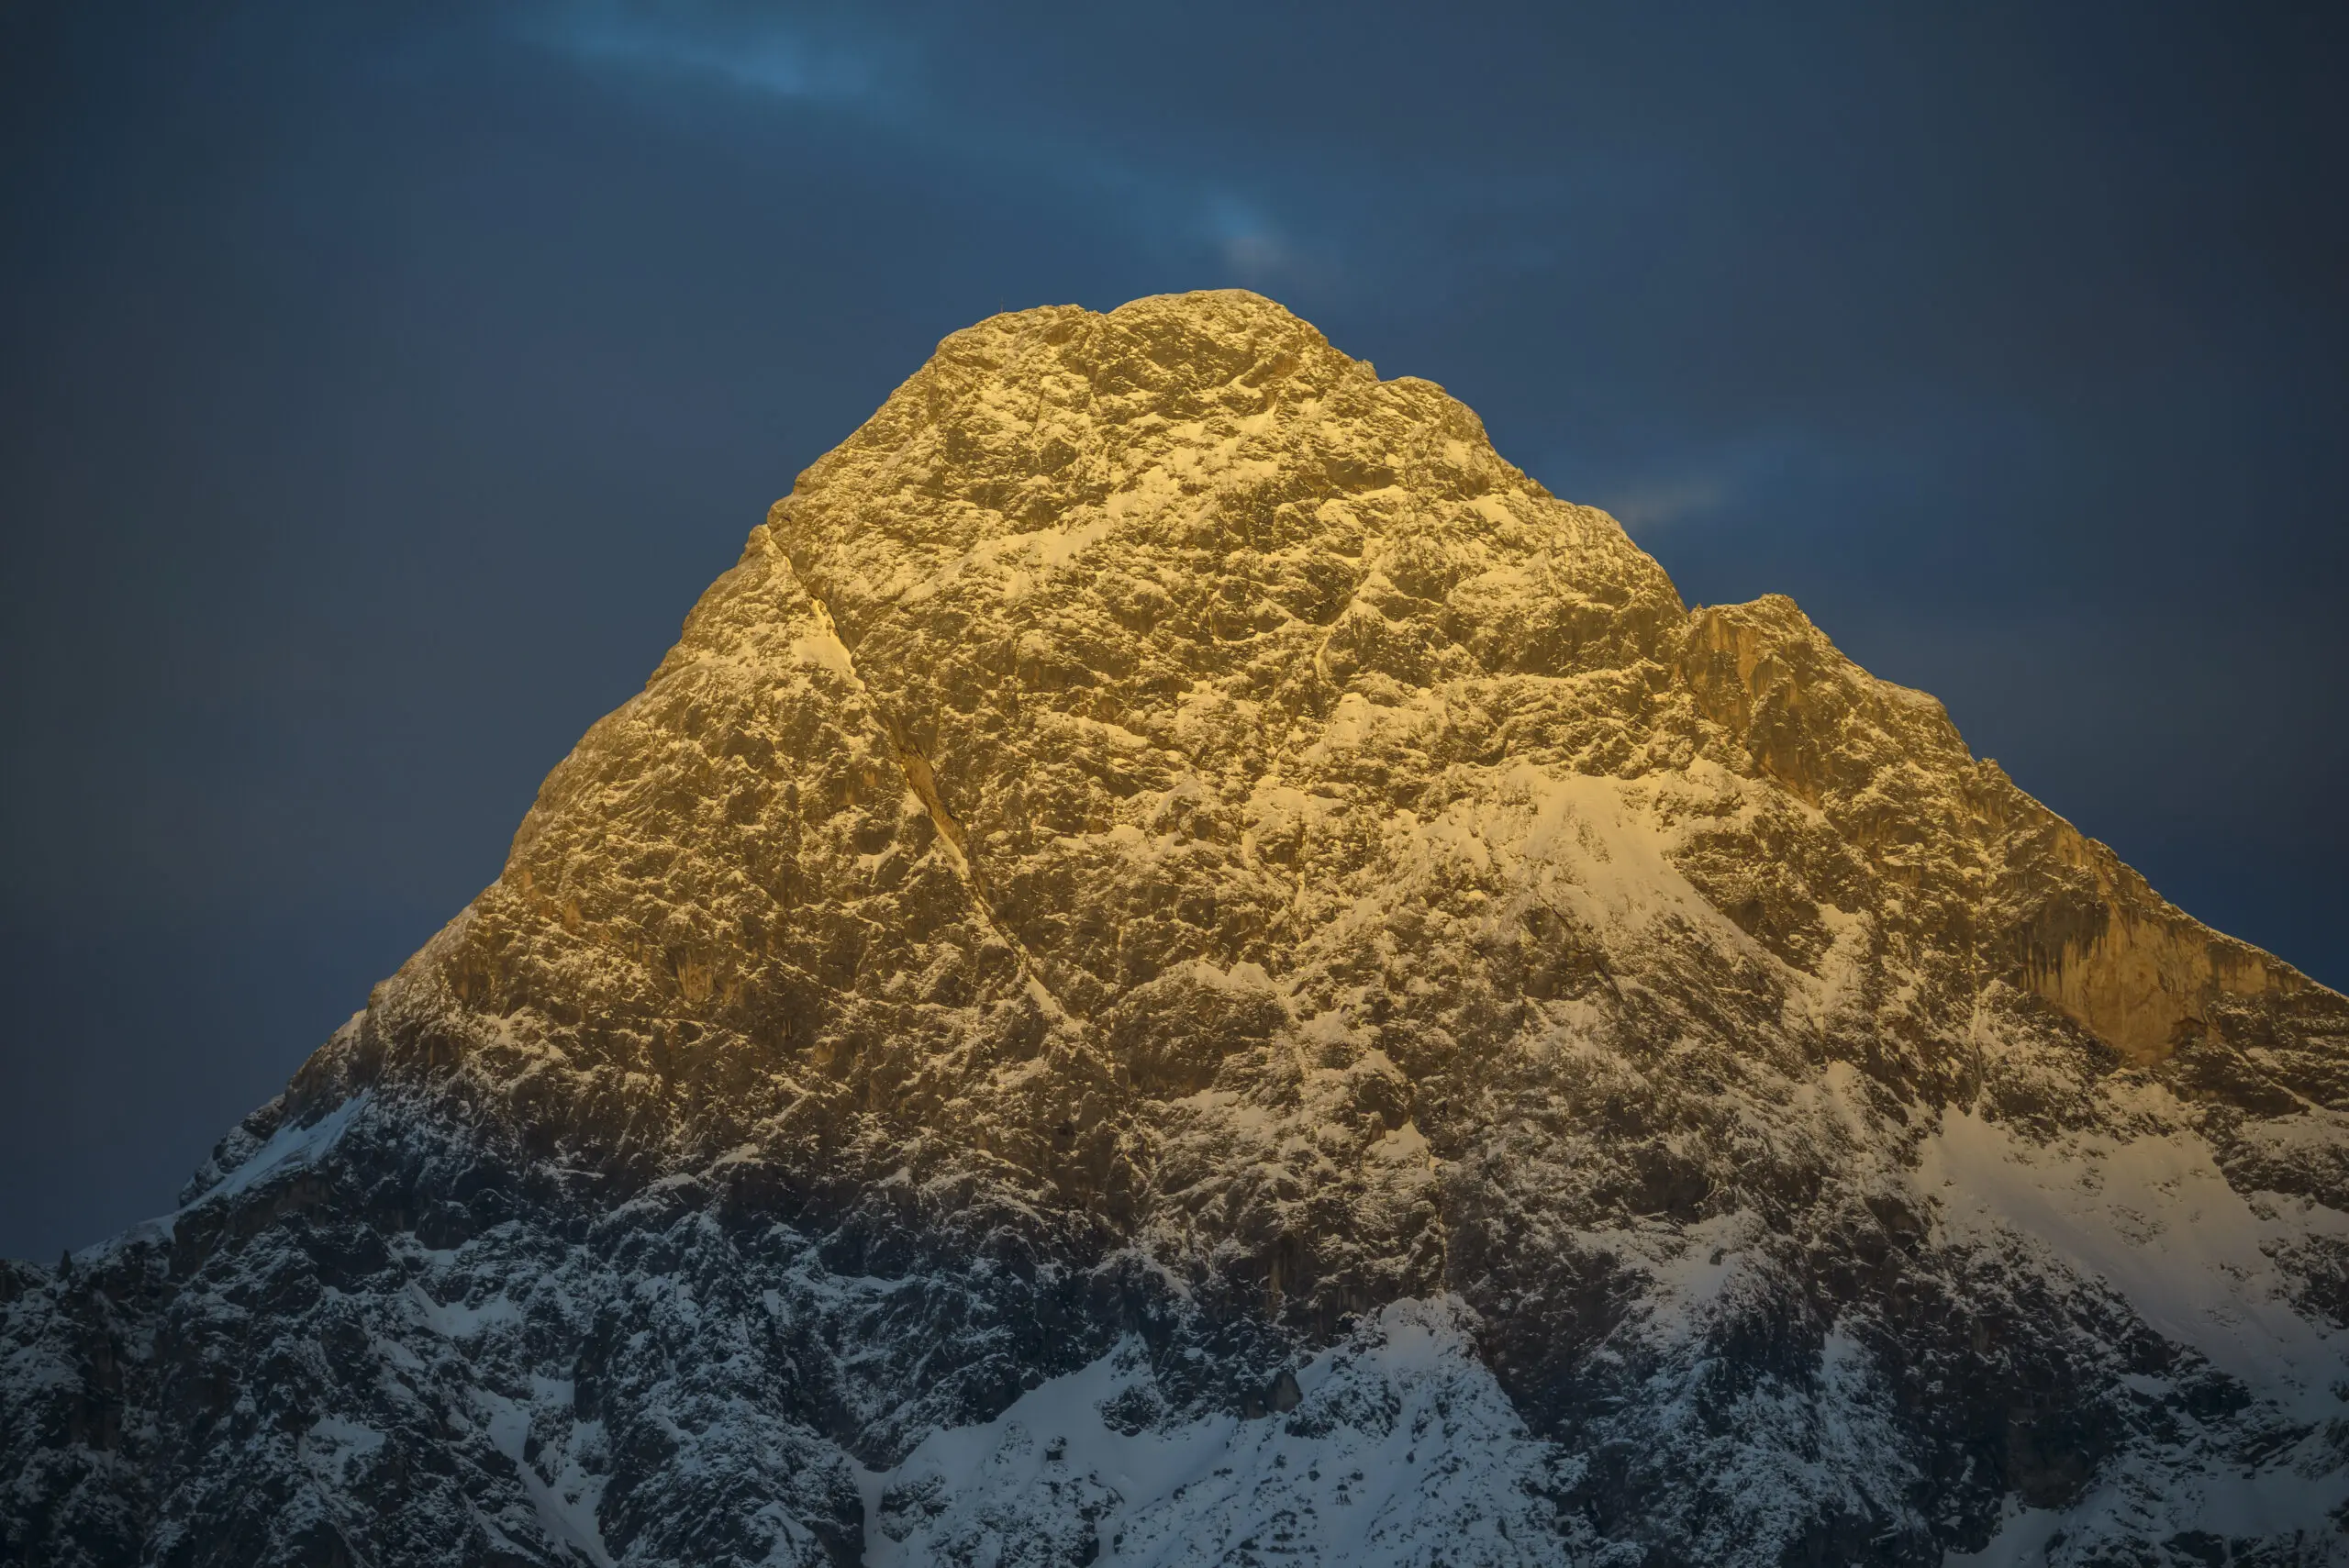 Wandbild (3763) Sonnenspitze präsentiert: Landschaften,Schnee und Eis,Winter,Berge